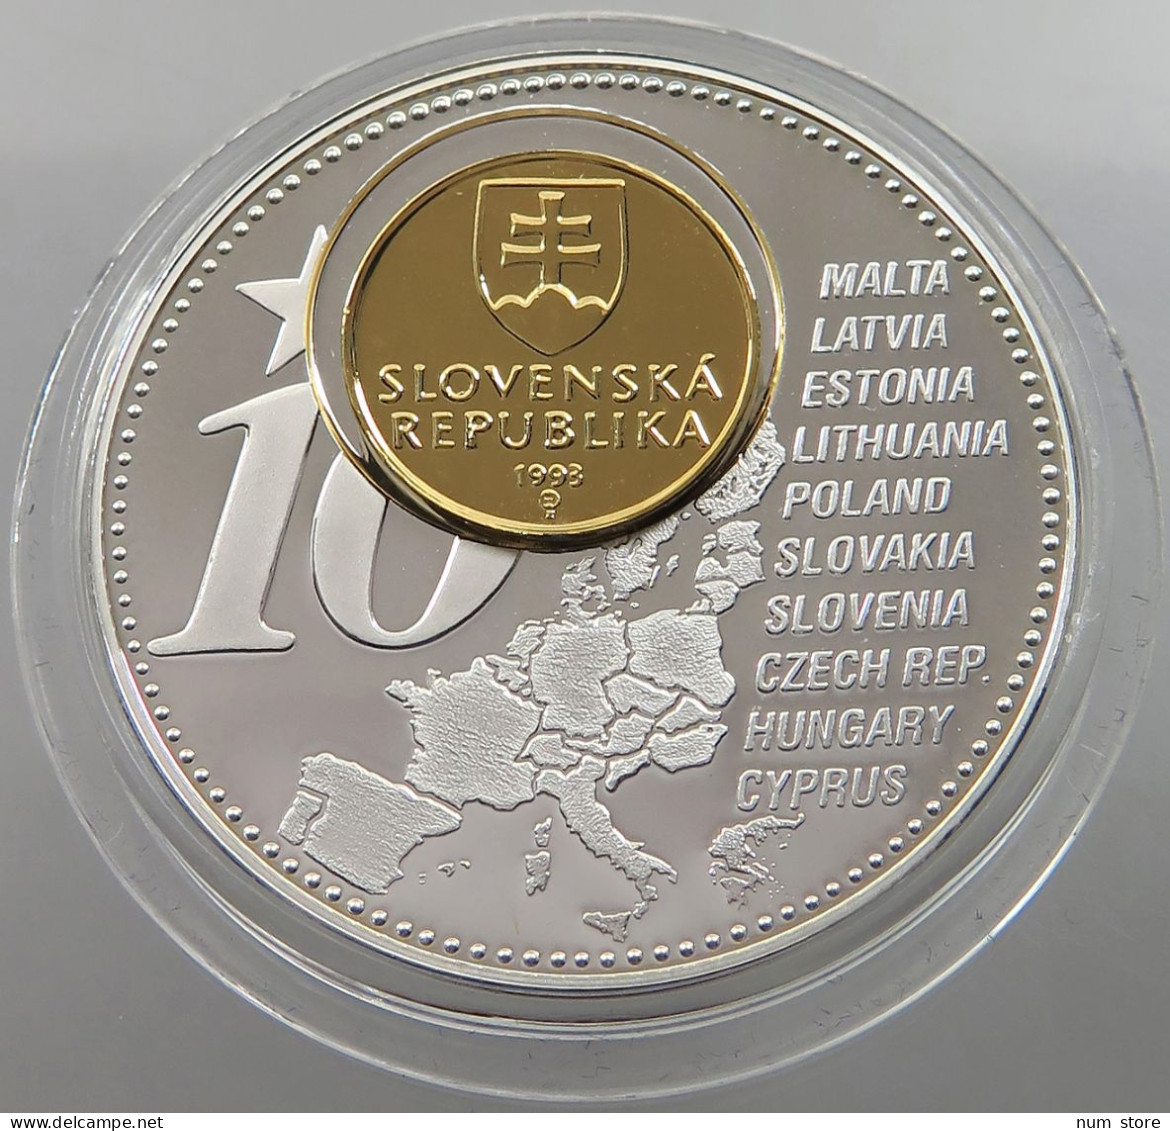 SLOVAKIA MEDAL 2006 THE FORTHCOMING NEW EURO COUNTRIES #sm06 0695 - Slovenia